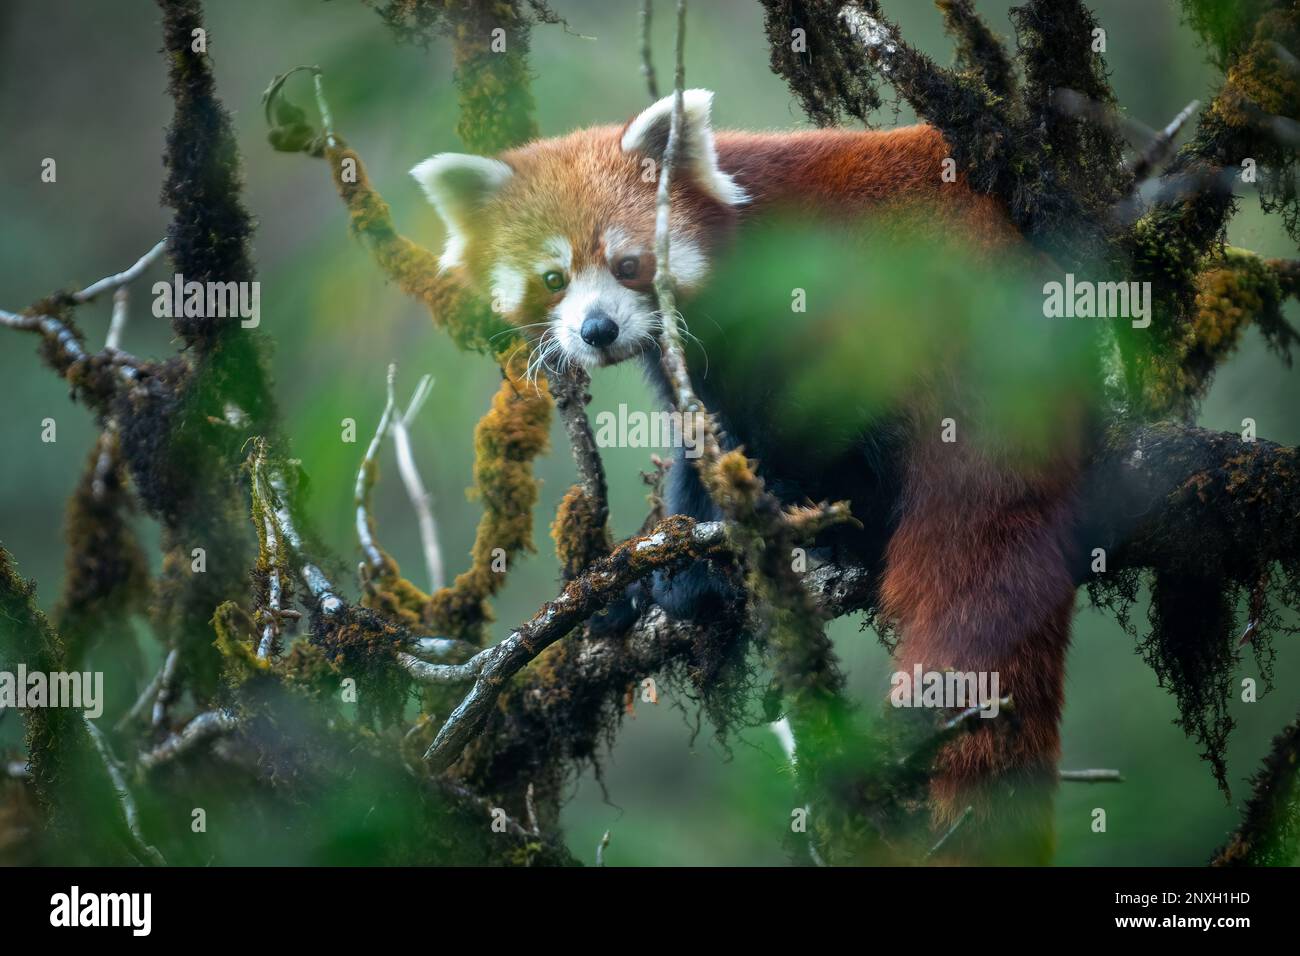 Medium telephoto image of a red panda female sitting in a mossy oak nut tree Stock Photo